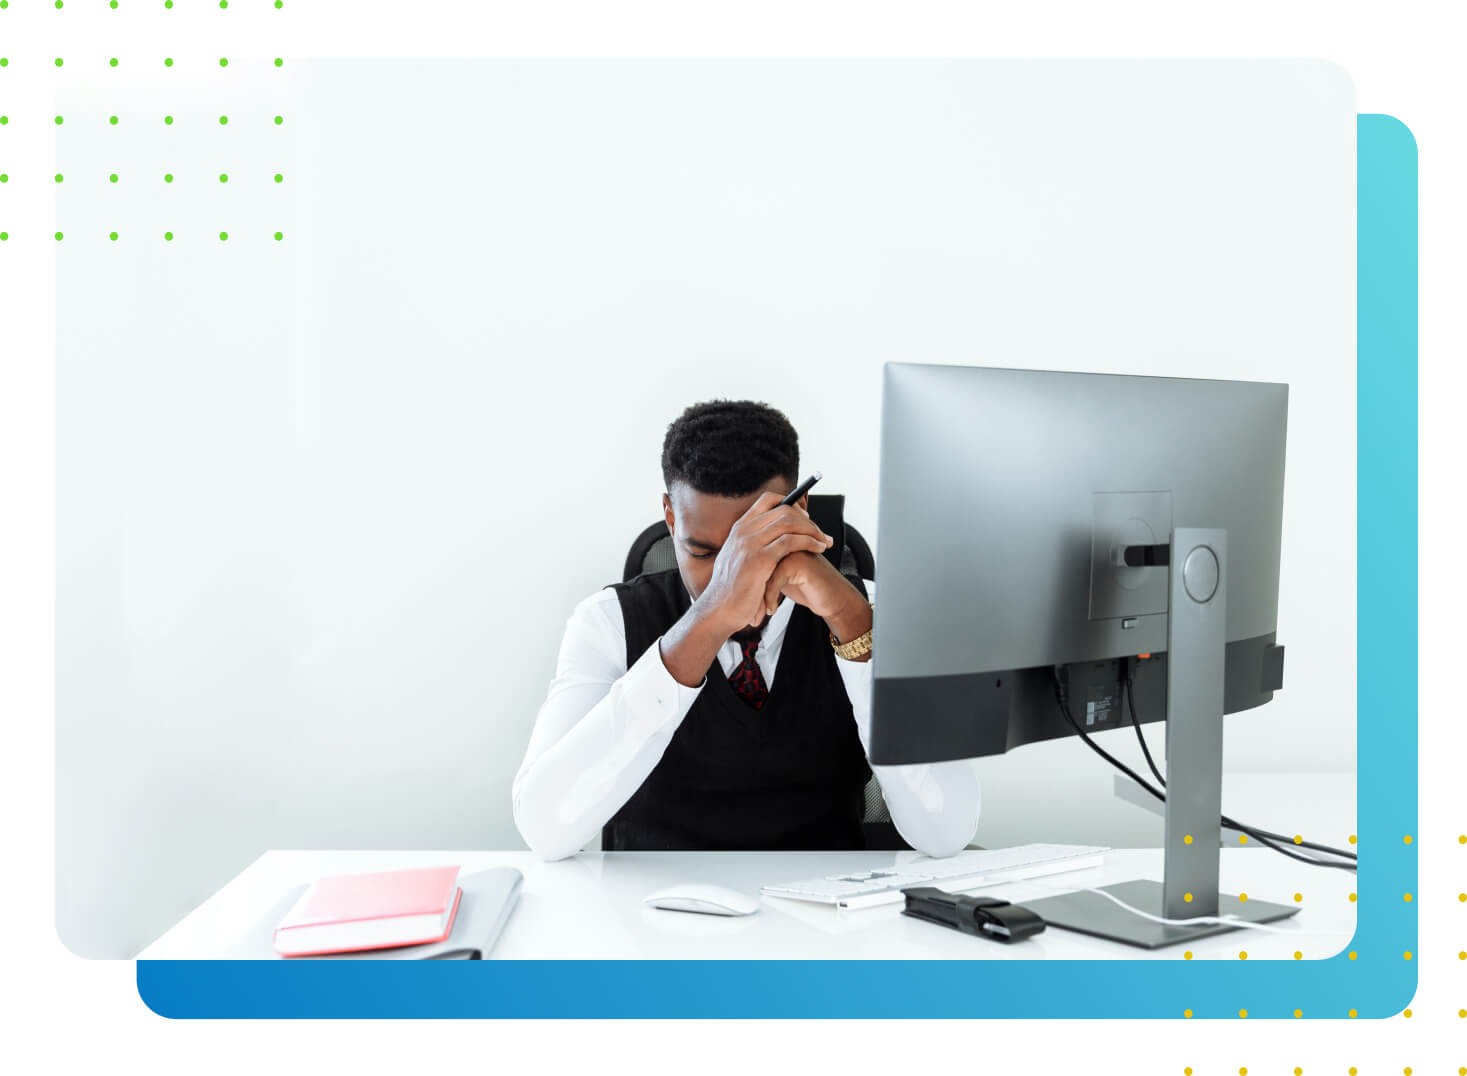 An office man looking sad behind a desktop